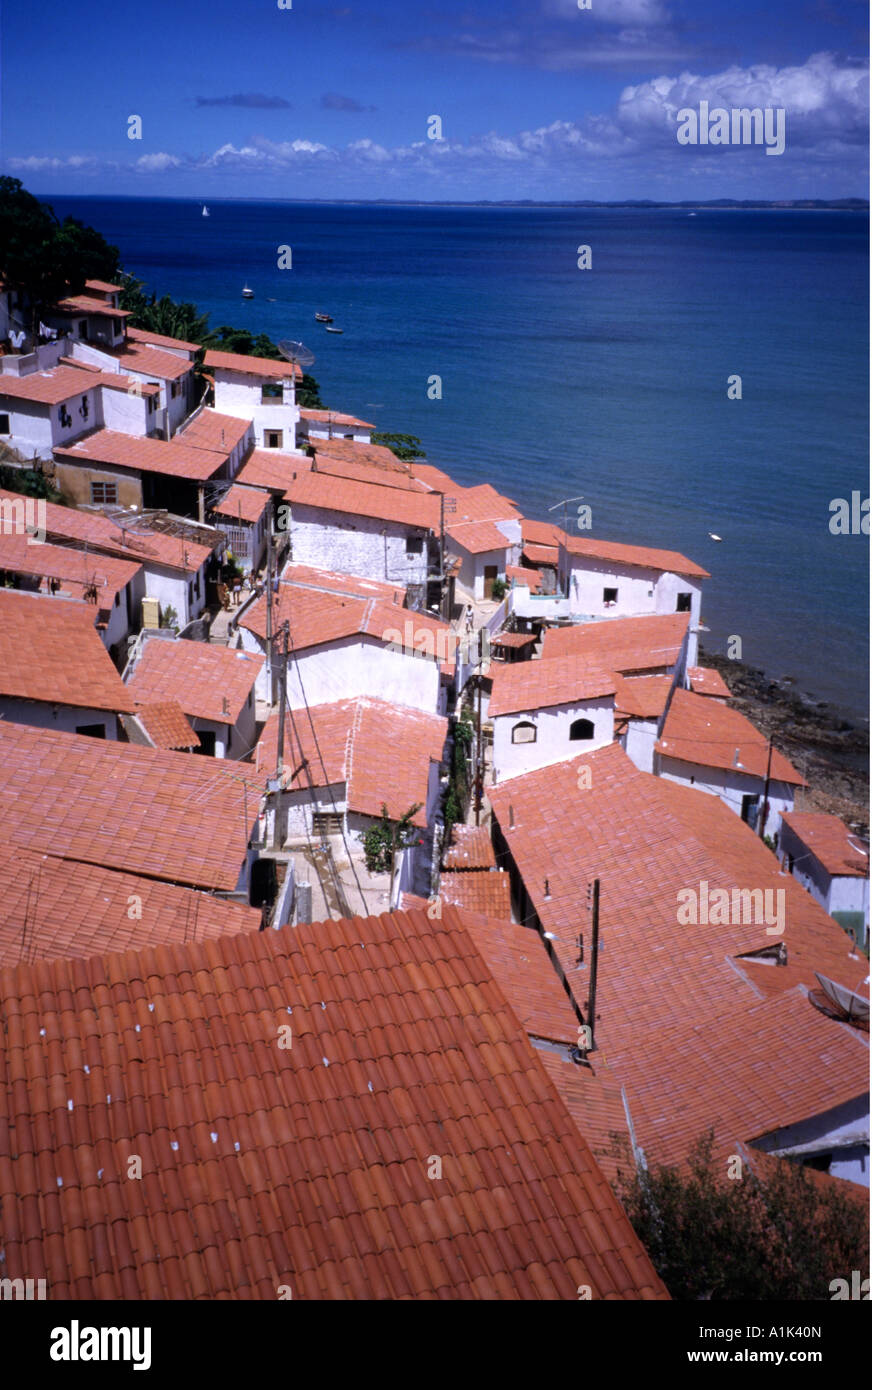 Red tile roofed homes in Salvador Bahia Brazil look out on the Bay of All Saints  ( Baia de Todos os Santos) Stock Photo